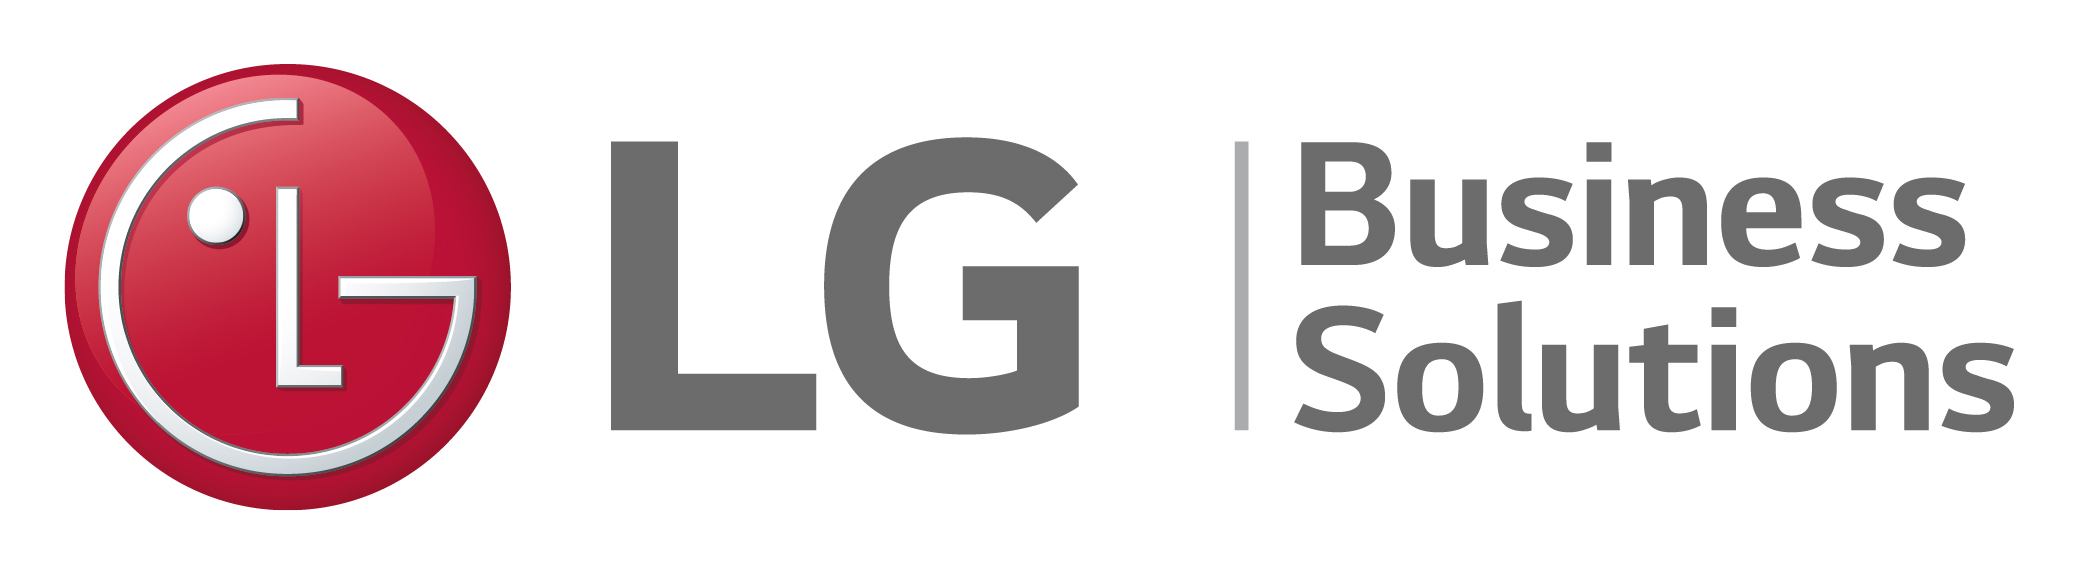 20210701_LGE_B2B Brand Logo_3D_White Background